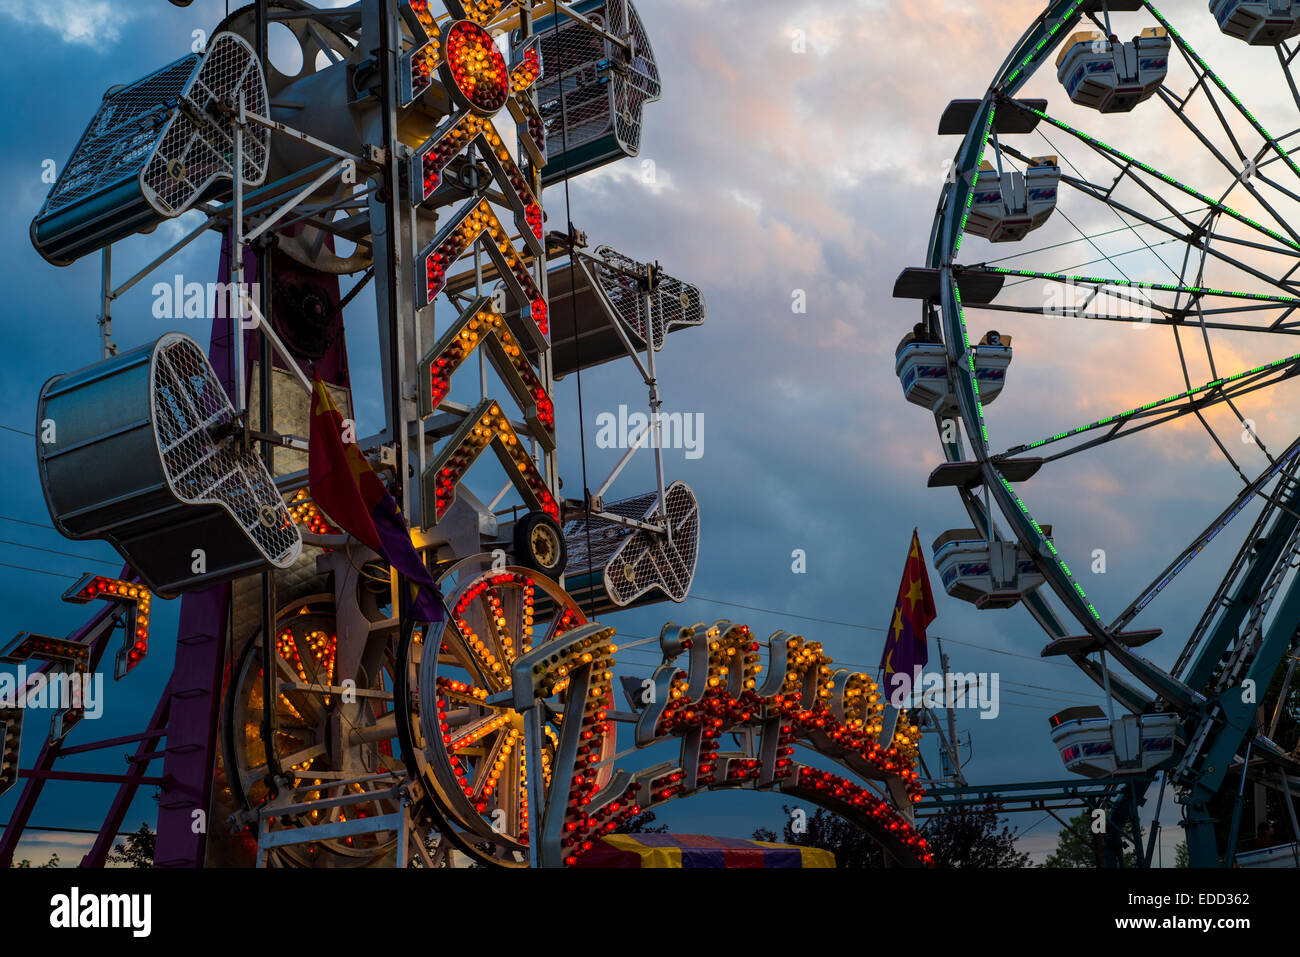 Amusement rides at a county fair at sunset. Stock Photo